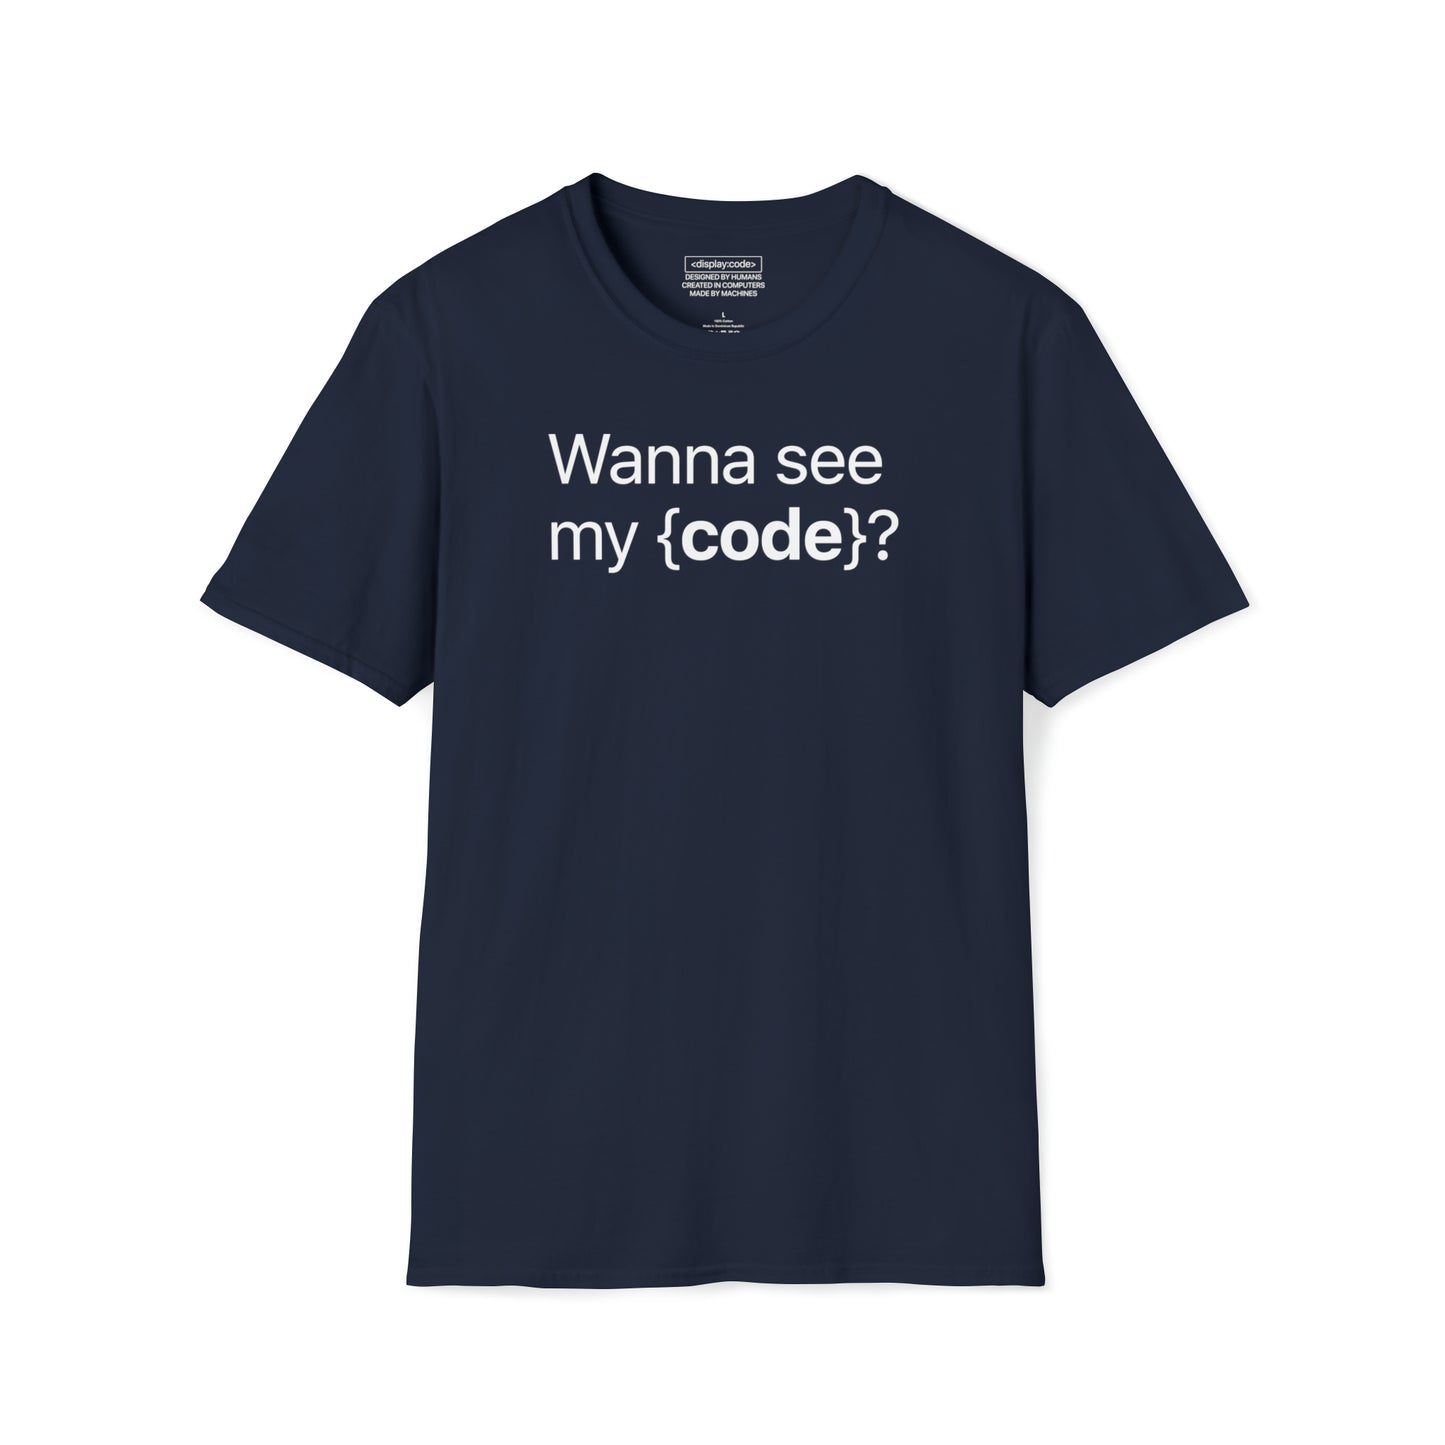 Wanna see my code